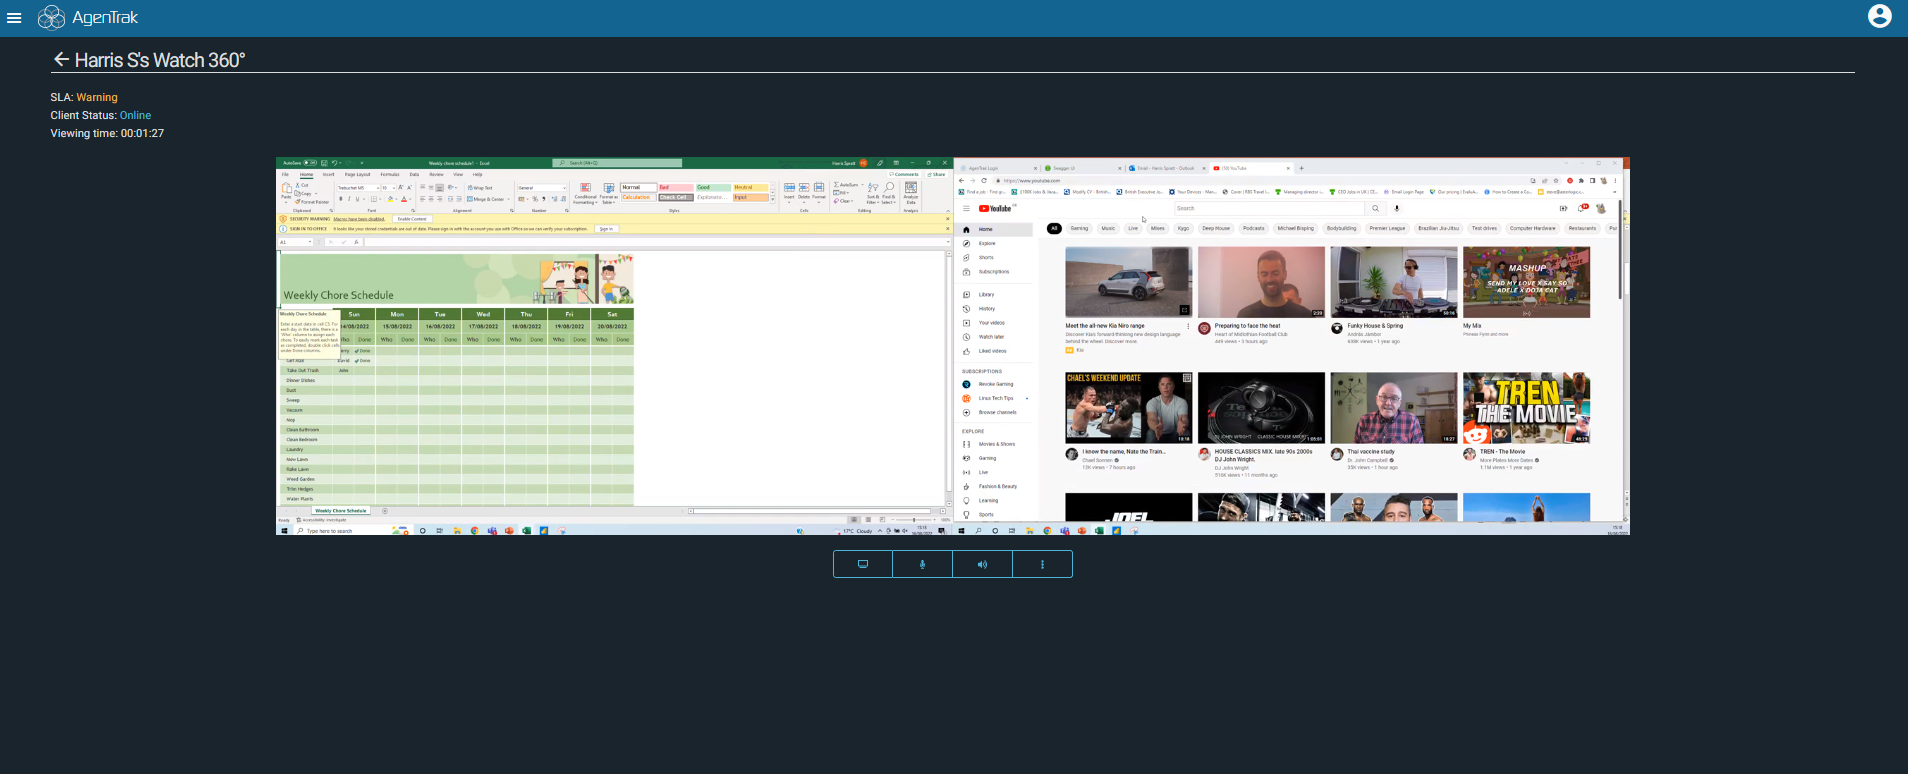 AgenTrak Watch360 Live Employee Screen View